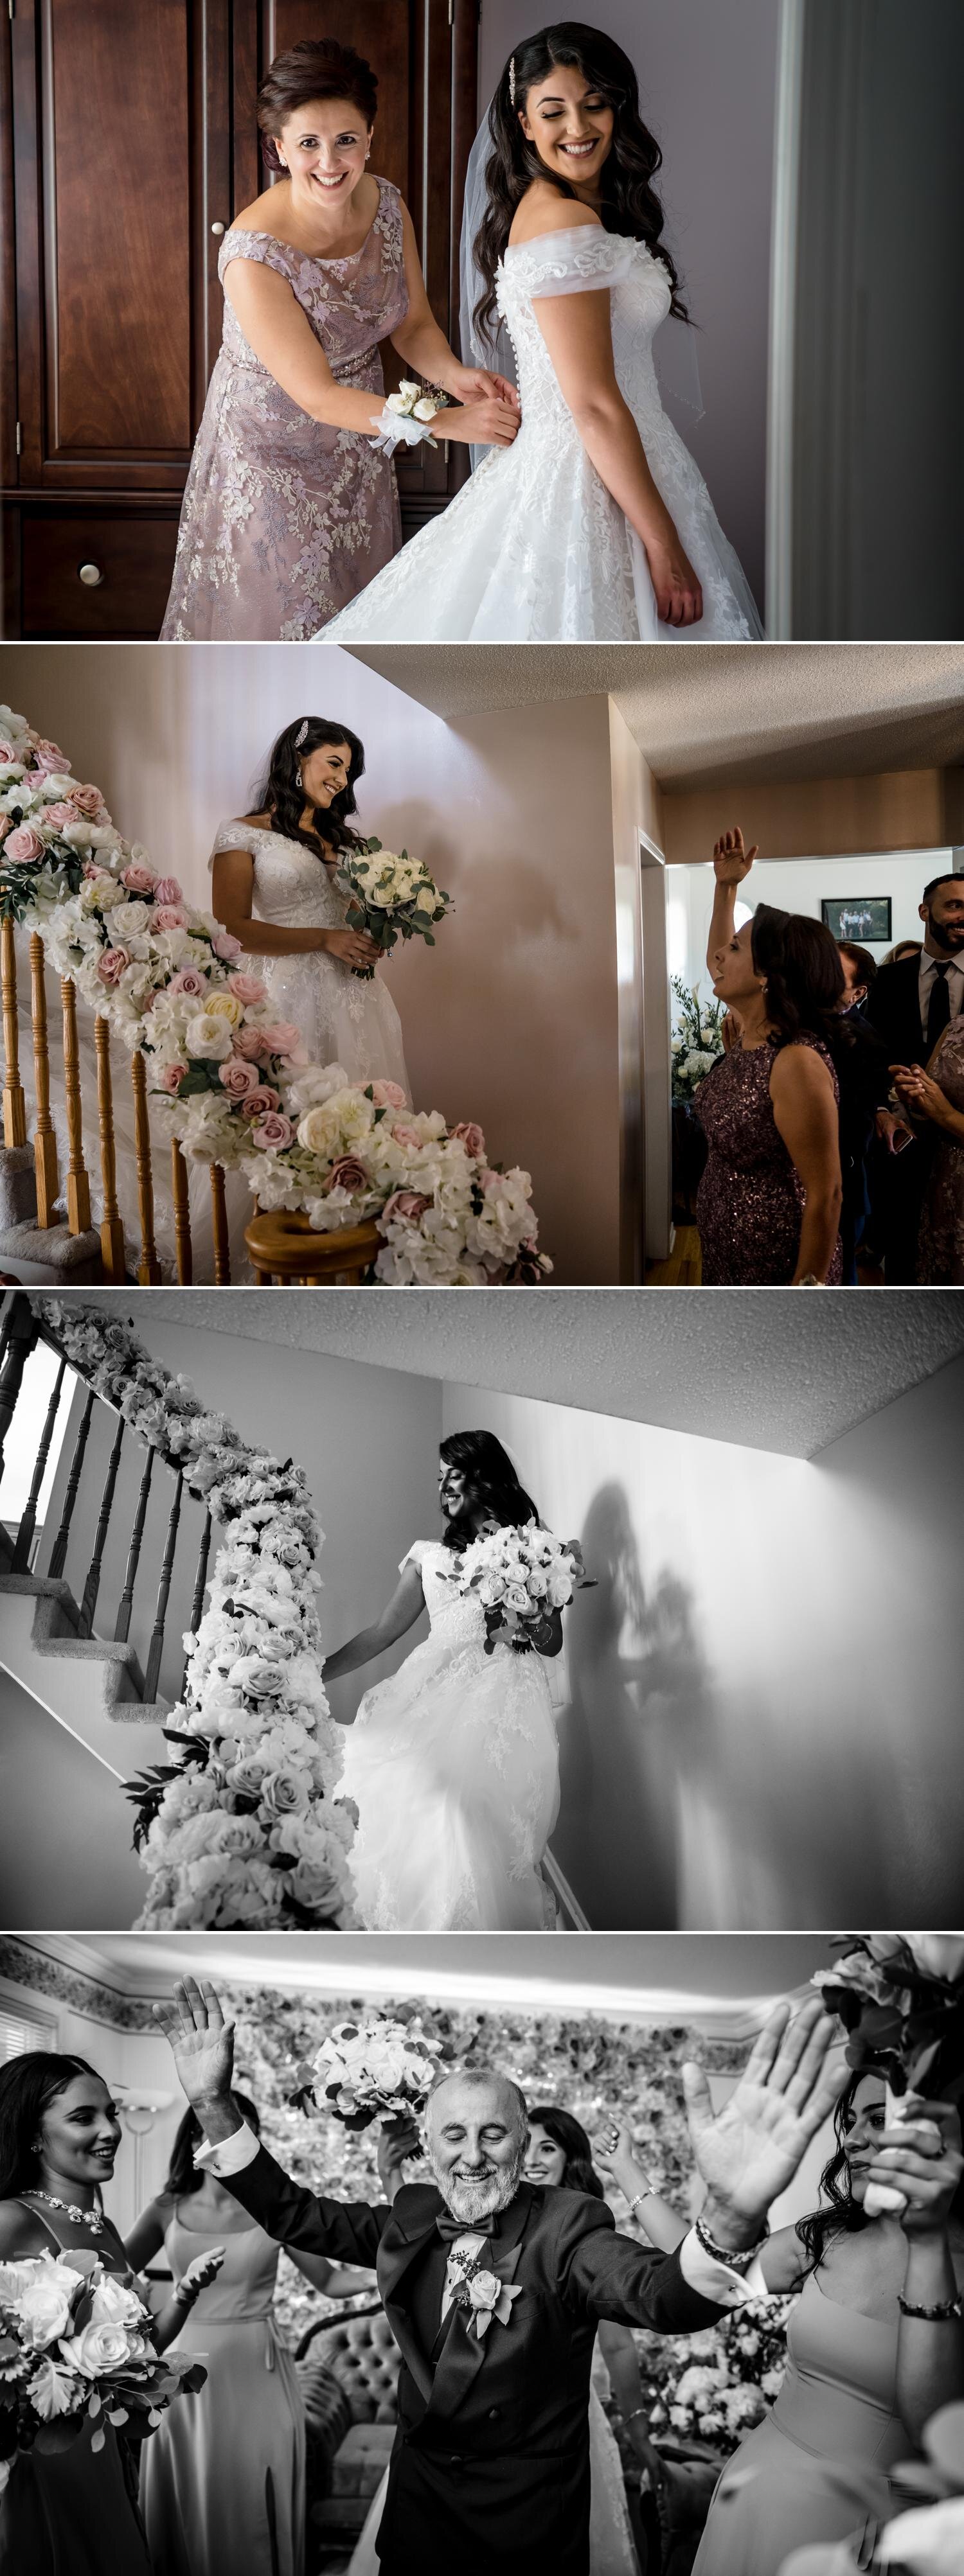 photos of a Lebanese bride getting ready